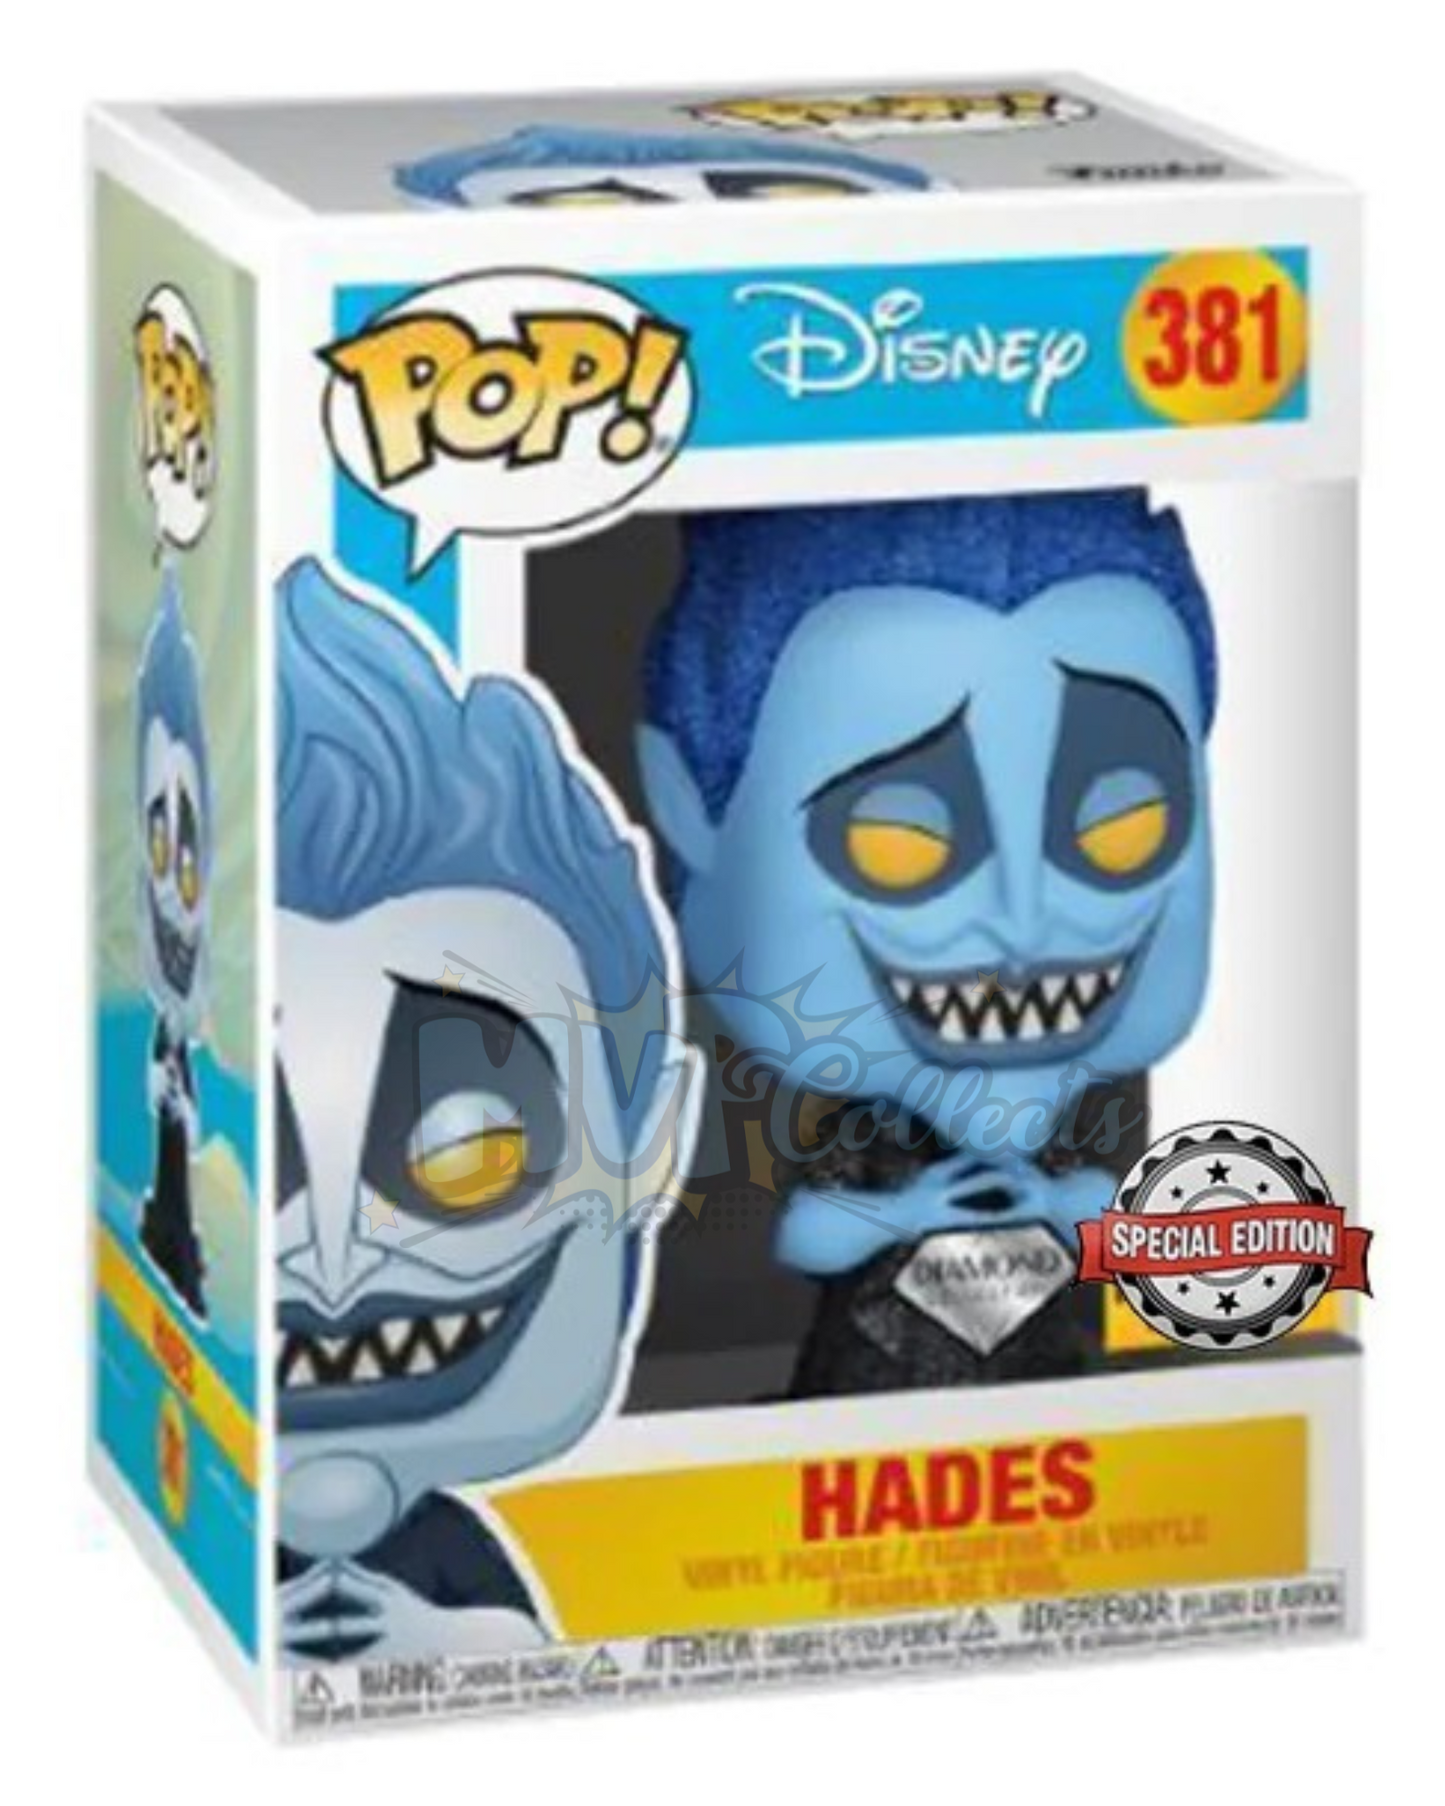 Hades POP! (Hercules) 381 Diamond SE Sticker